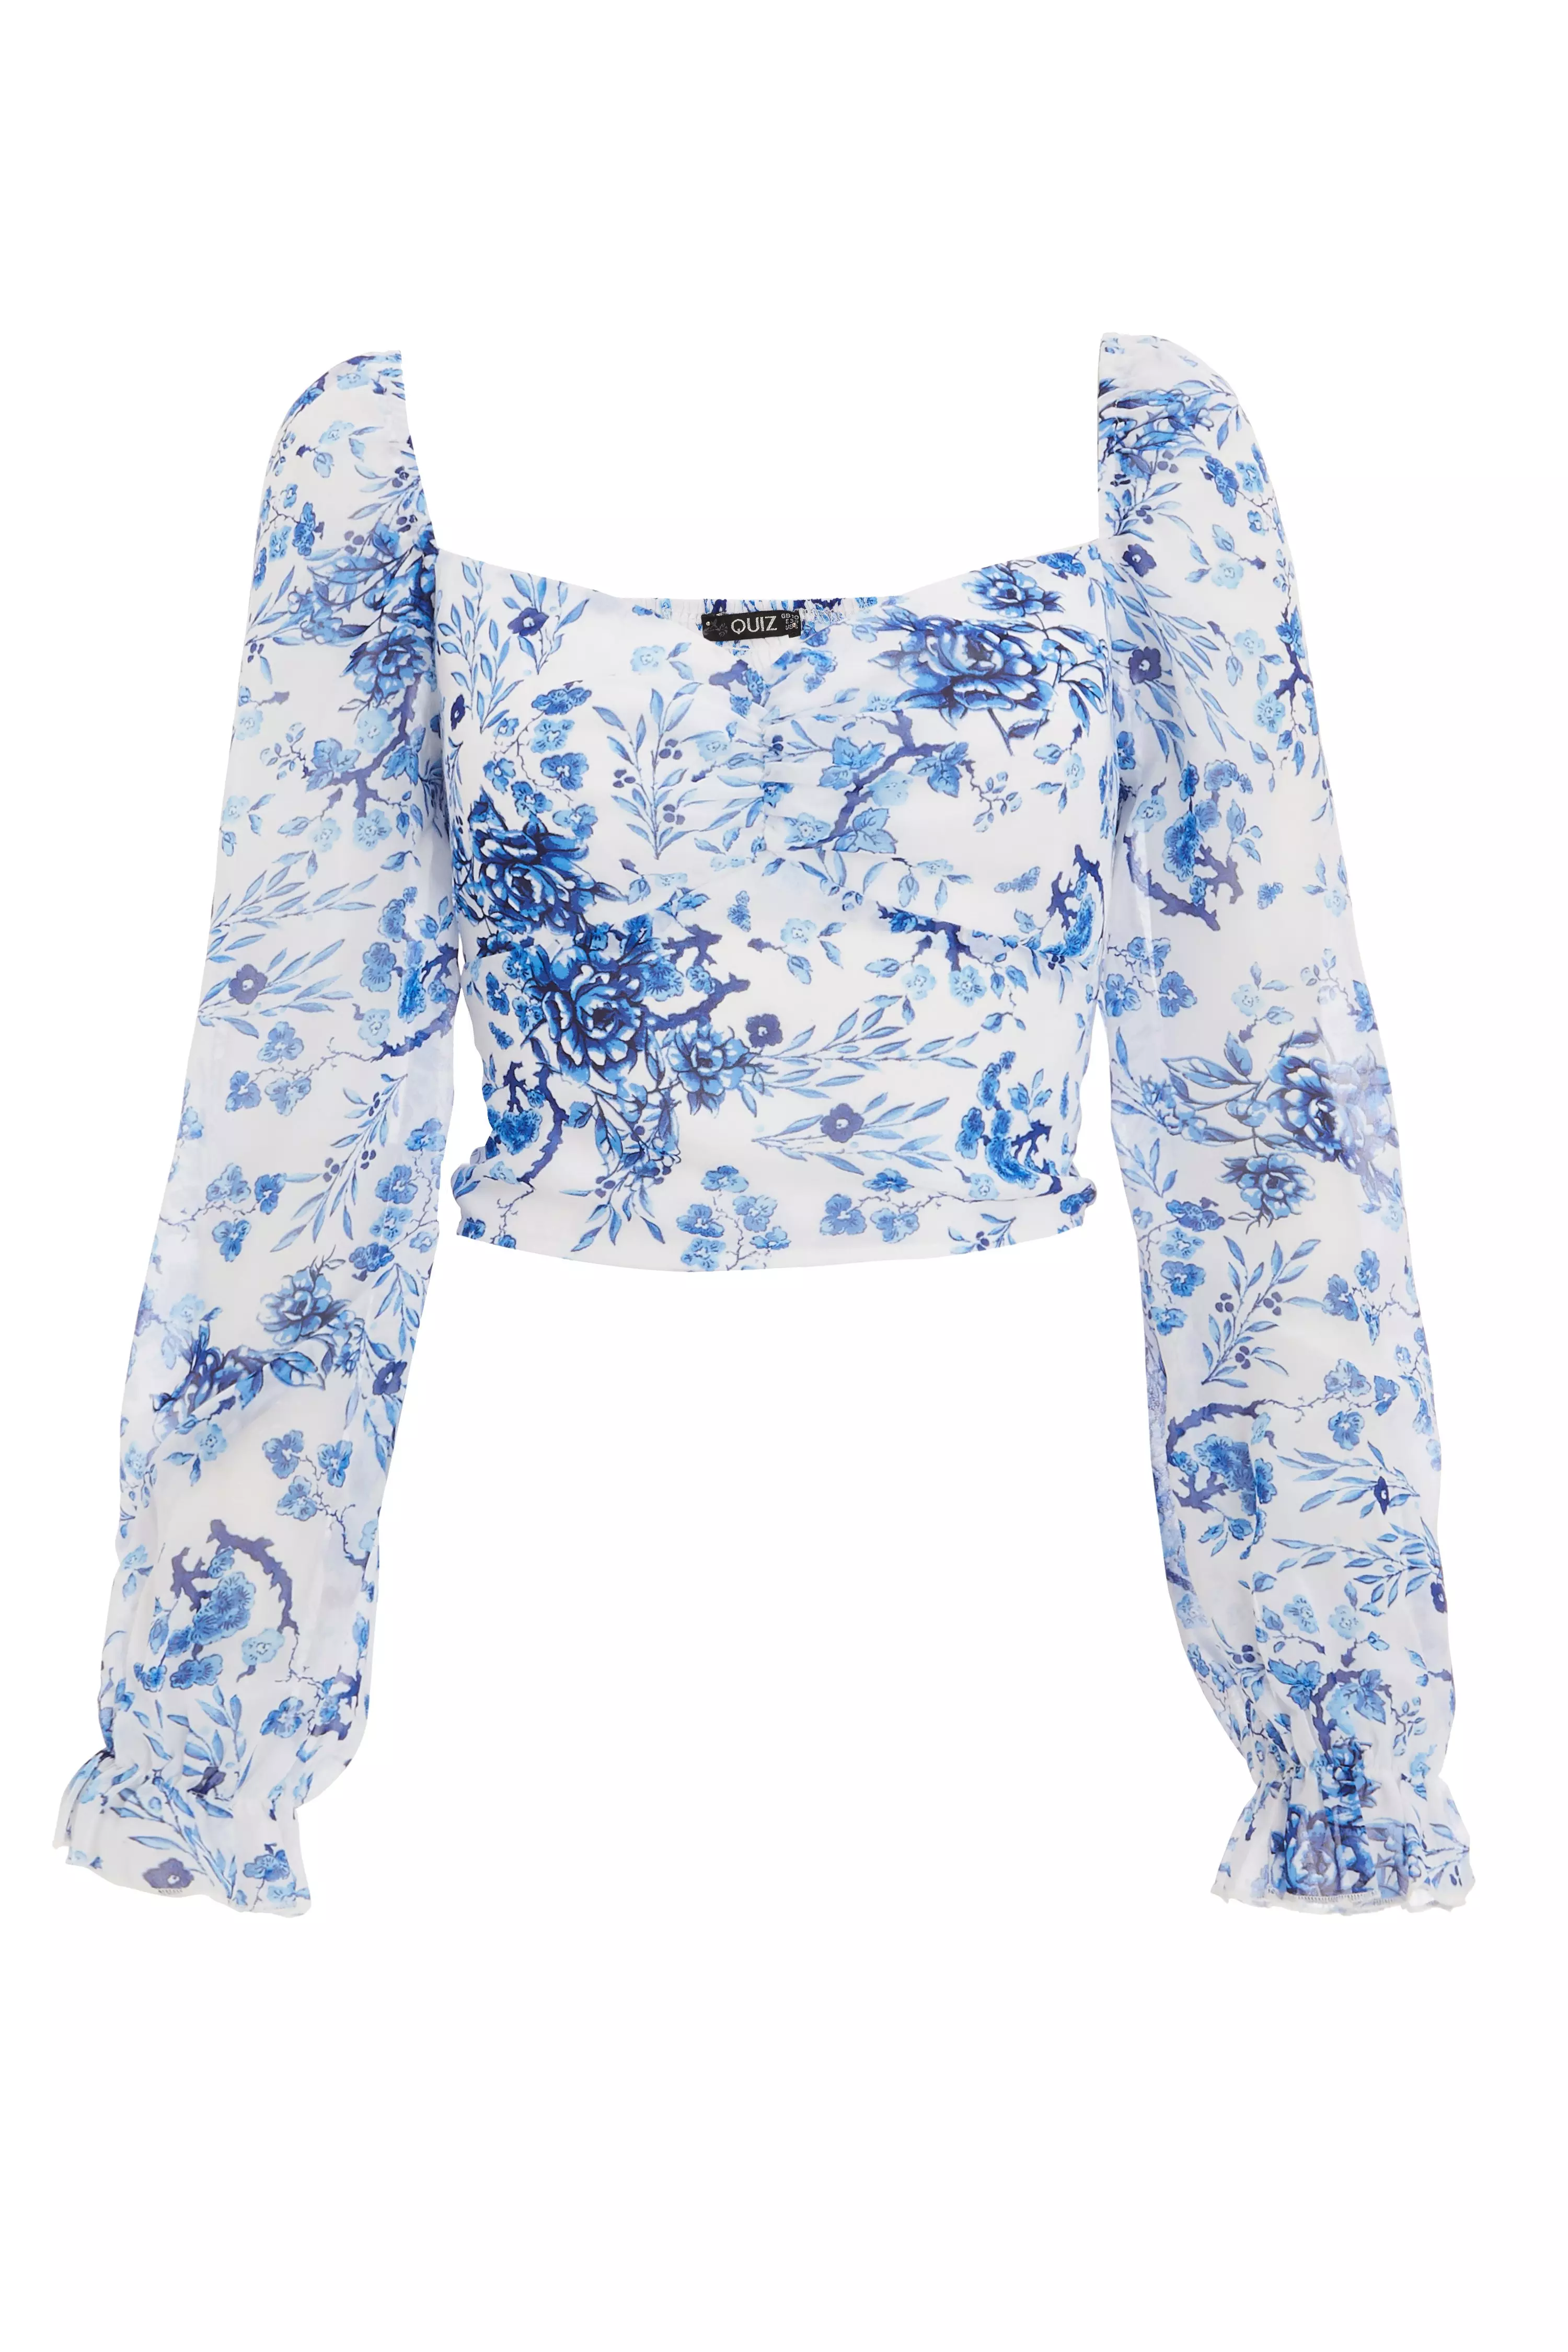 Blue Floral Print Crop Top - QUIZ Clothing